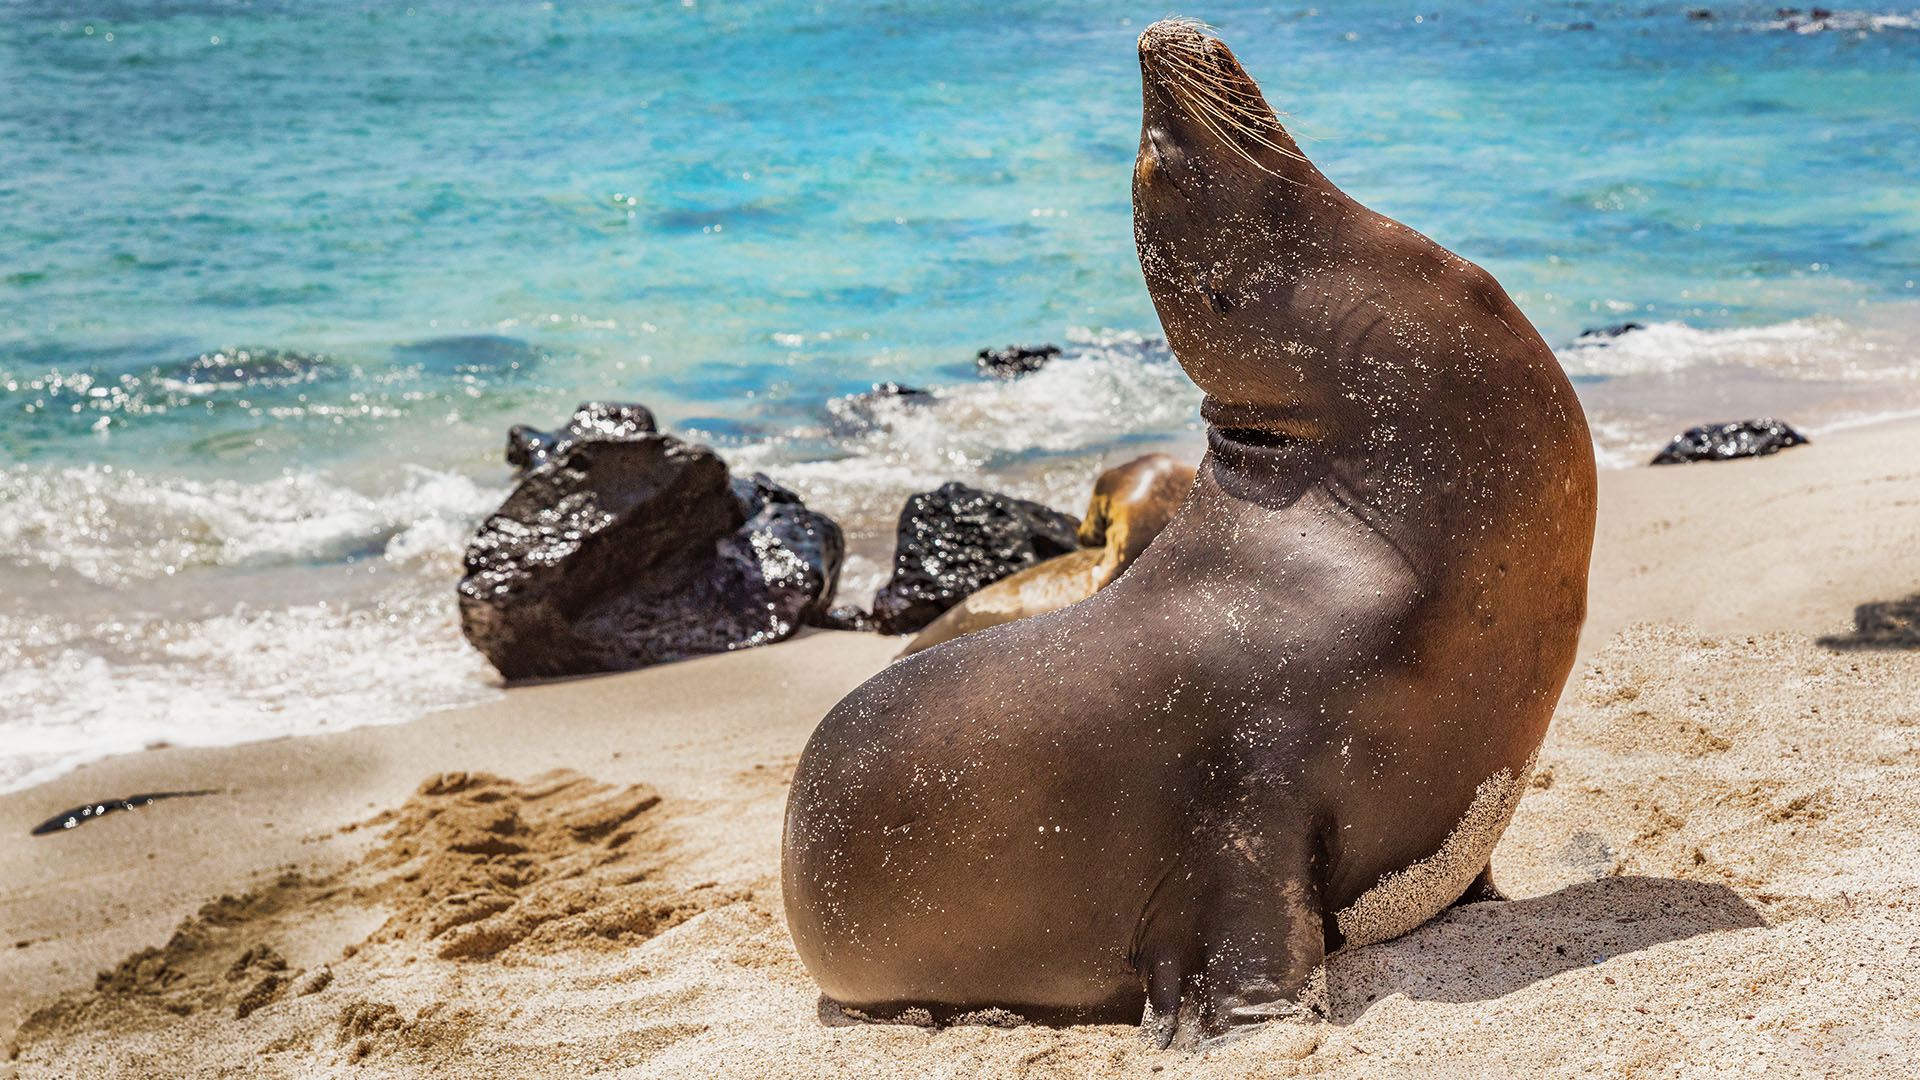 Galapagos Sea Lion in sand, Mann Beach (Playa Mann), San Cristobal